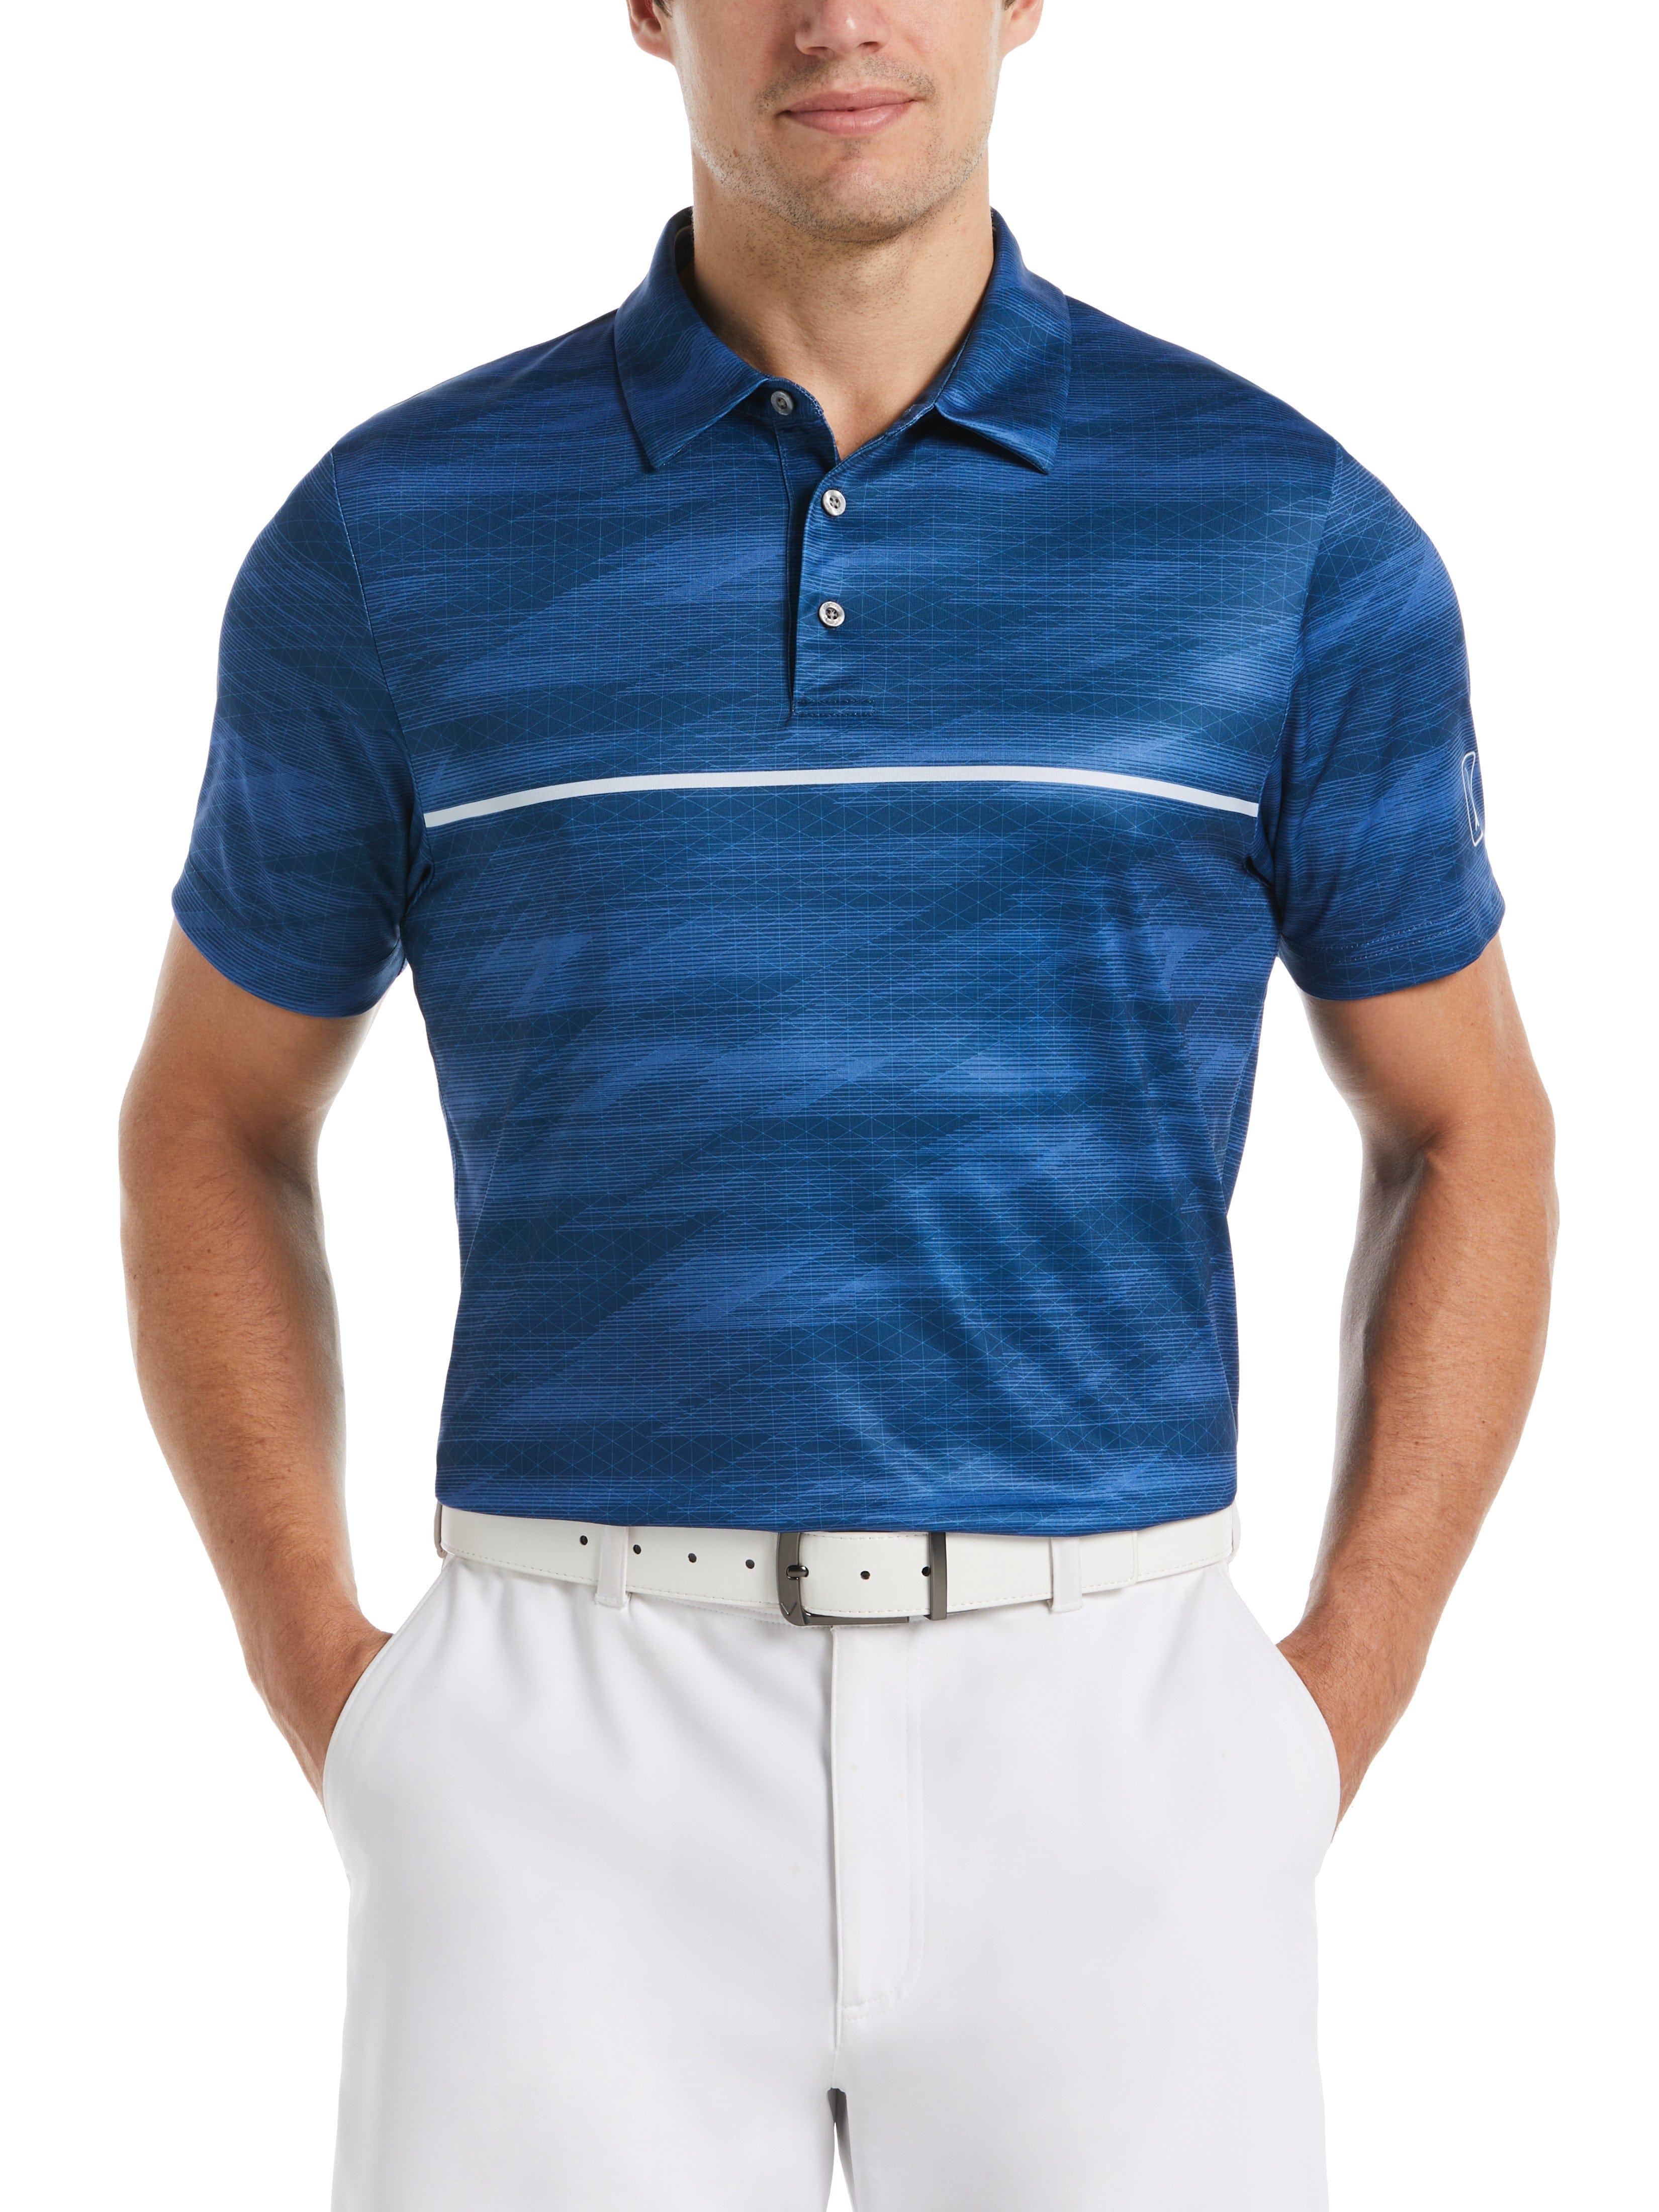 PGA TOUR Apparel Mens Digitized Chest Stripe Print Golf Polo Shirt, Size XL, Poseidon Blue, 100% Polyester | Golf Apparel Shop